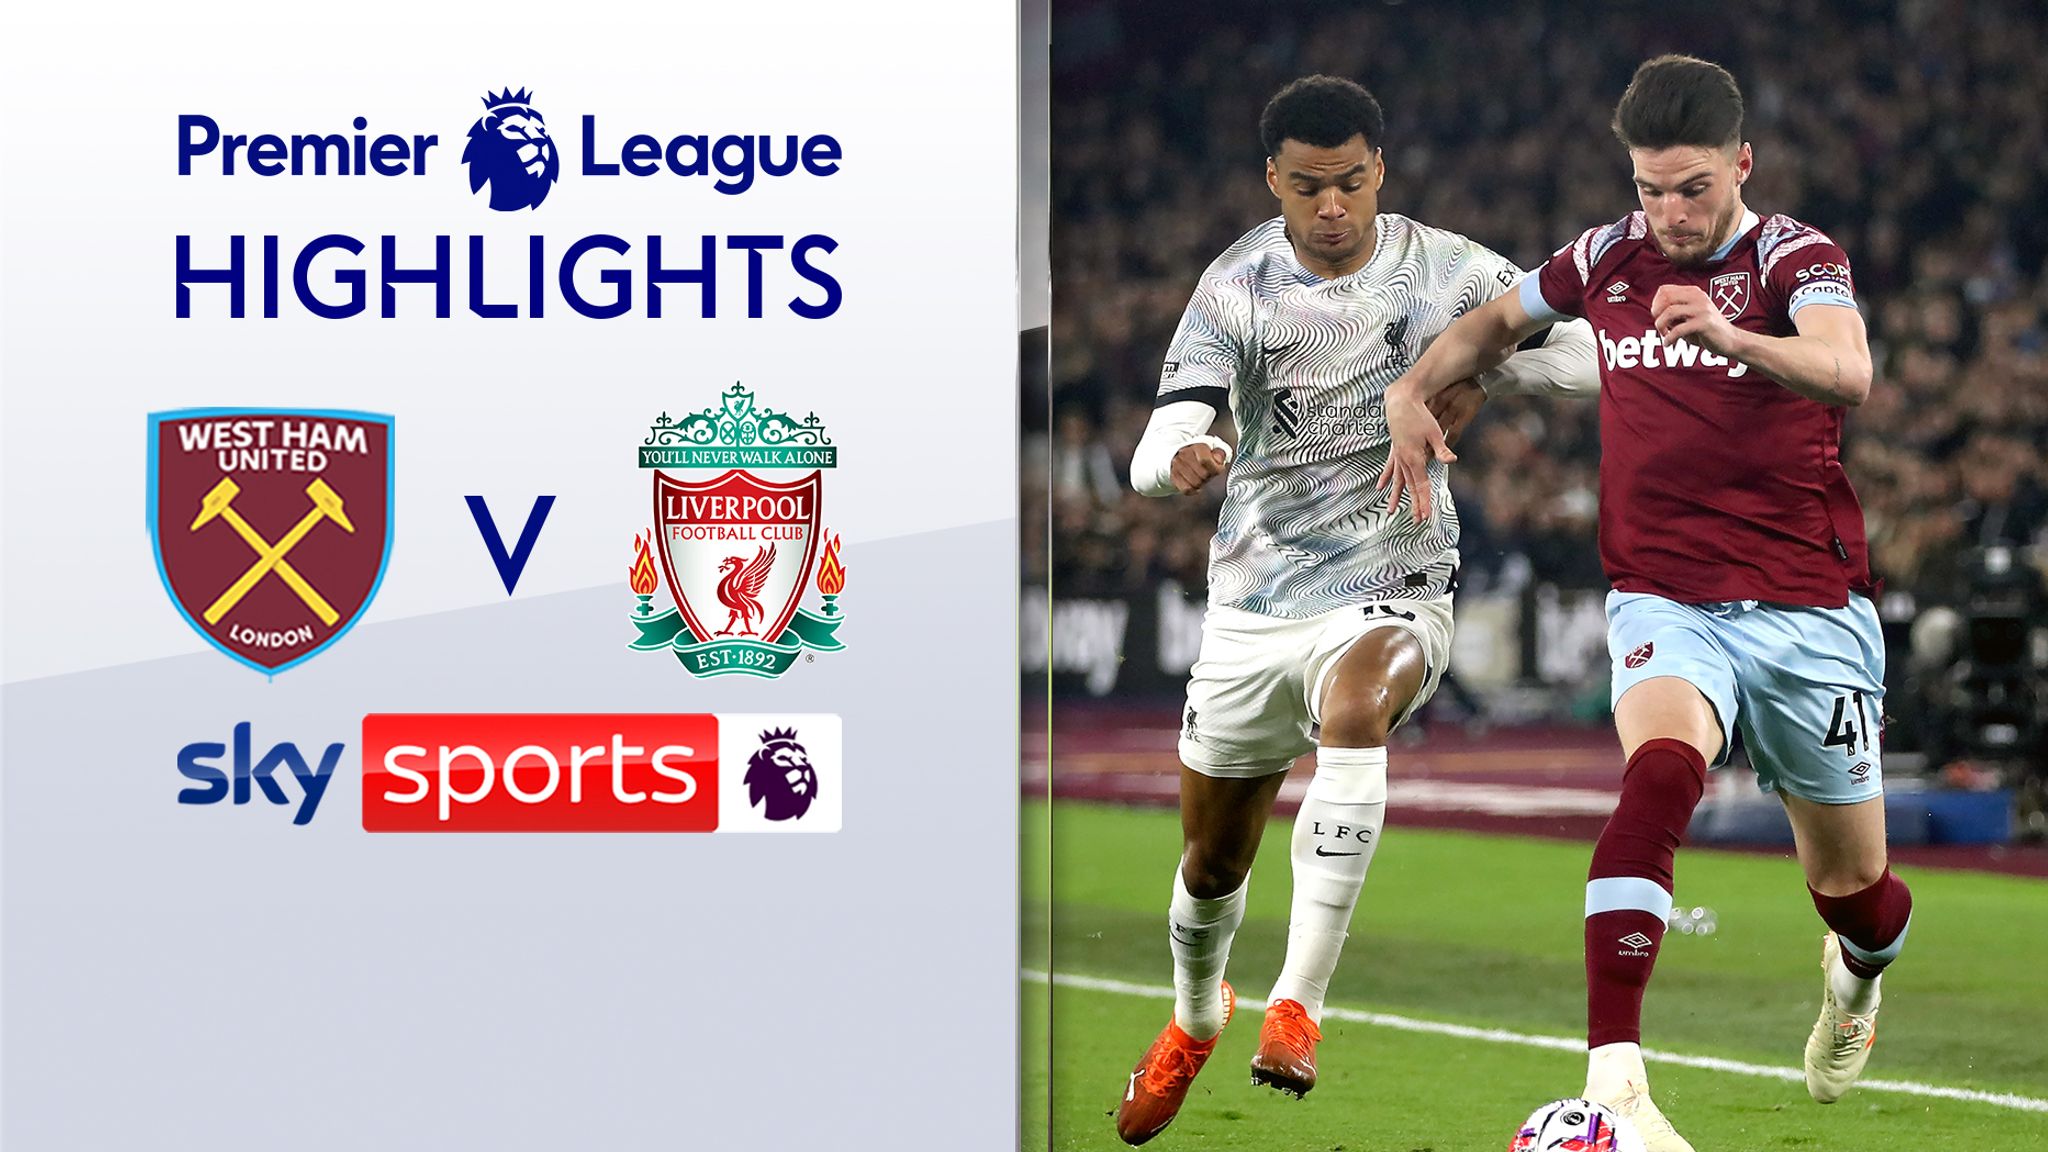 West Ham 1-2 Liverpool Premier League highlights Video Watch TV Show Sky Sports